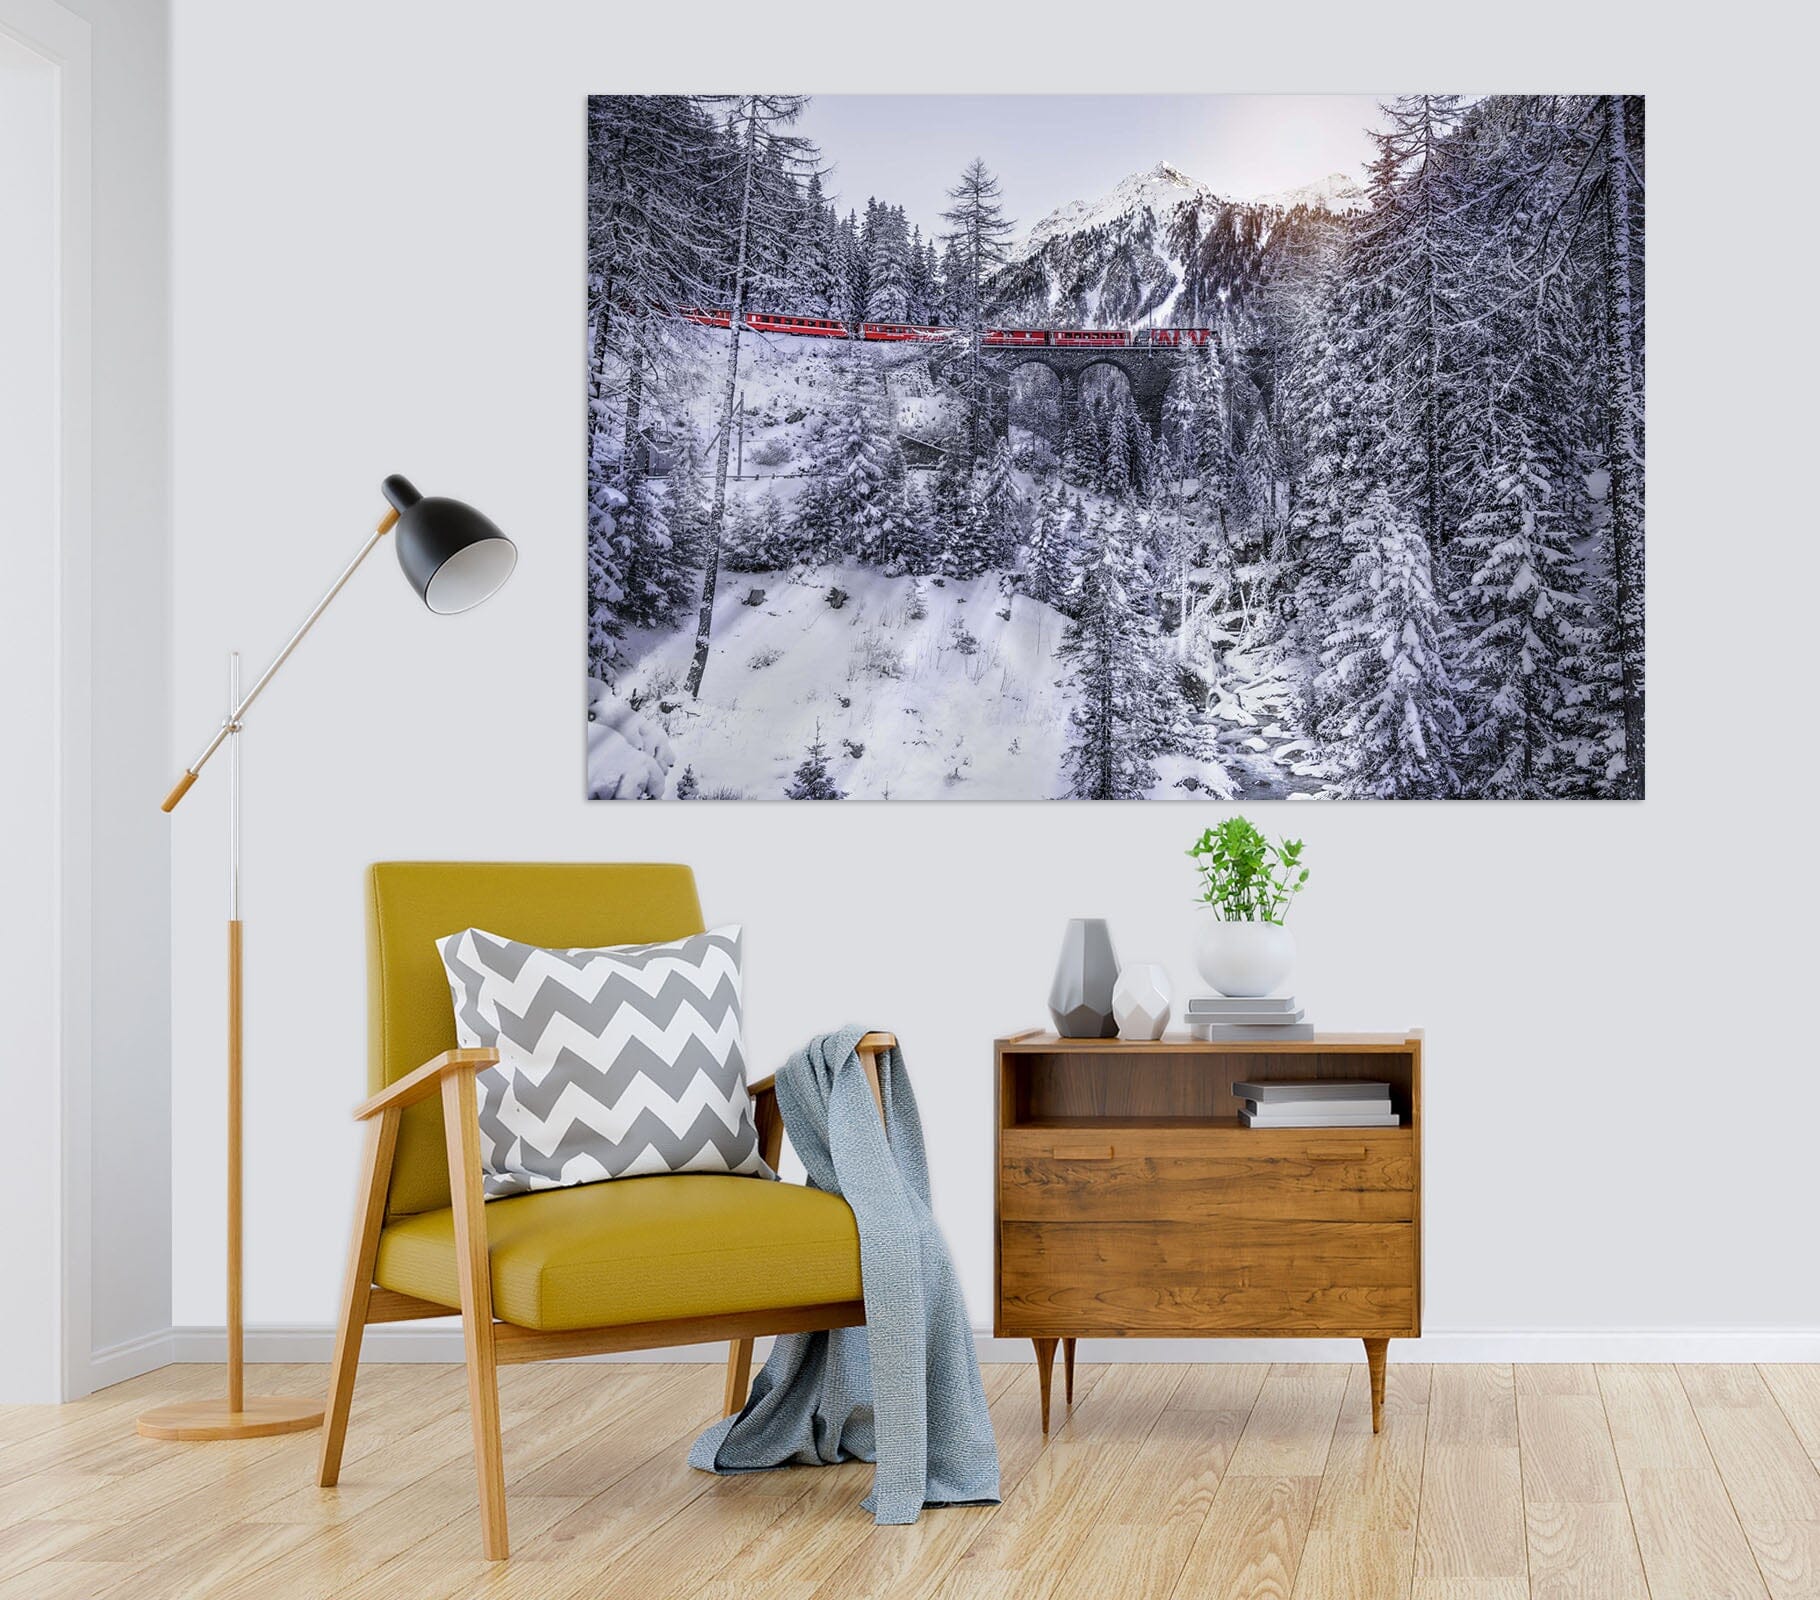 3D Snow Mountain Forest 146 Marco Carmassi Wall Sticker Wallpaper AJ Wallpaper 2 